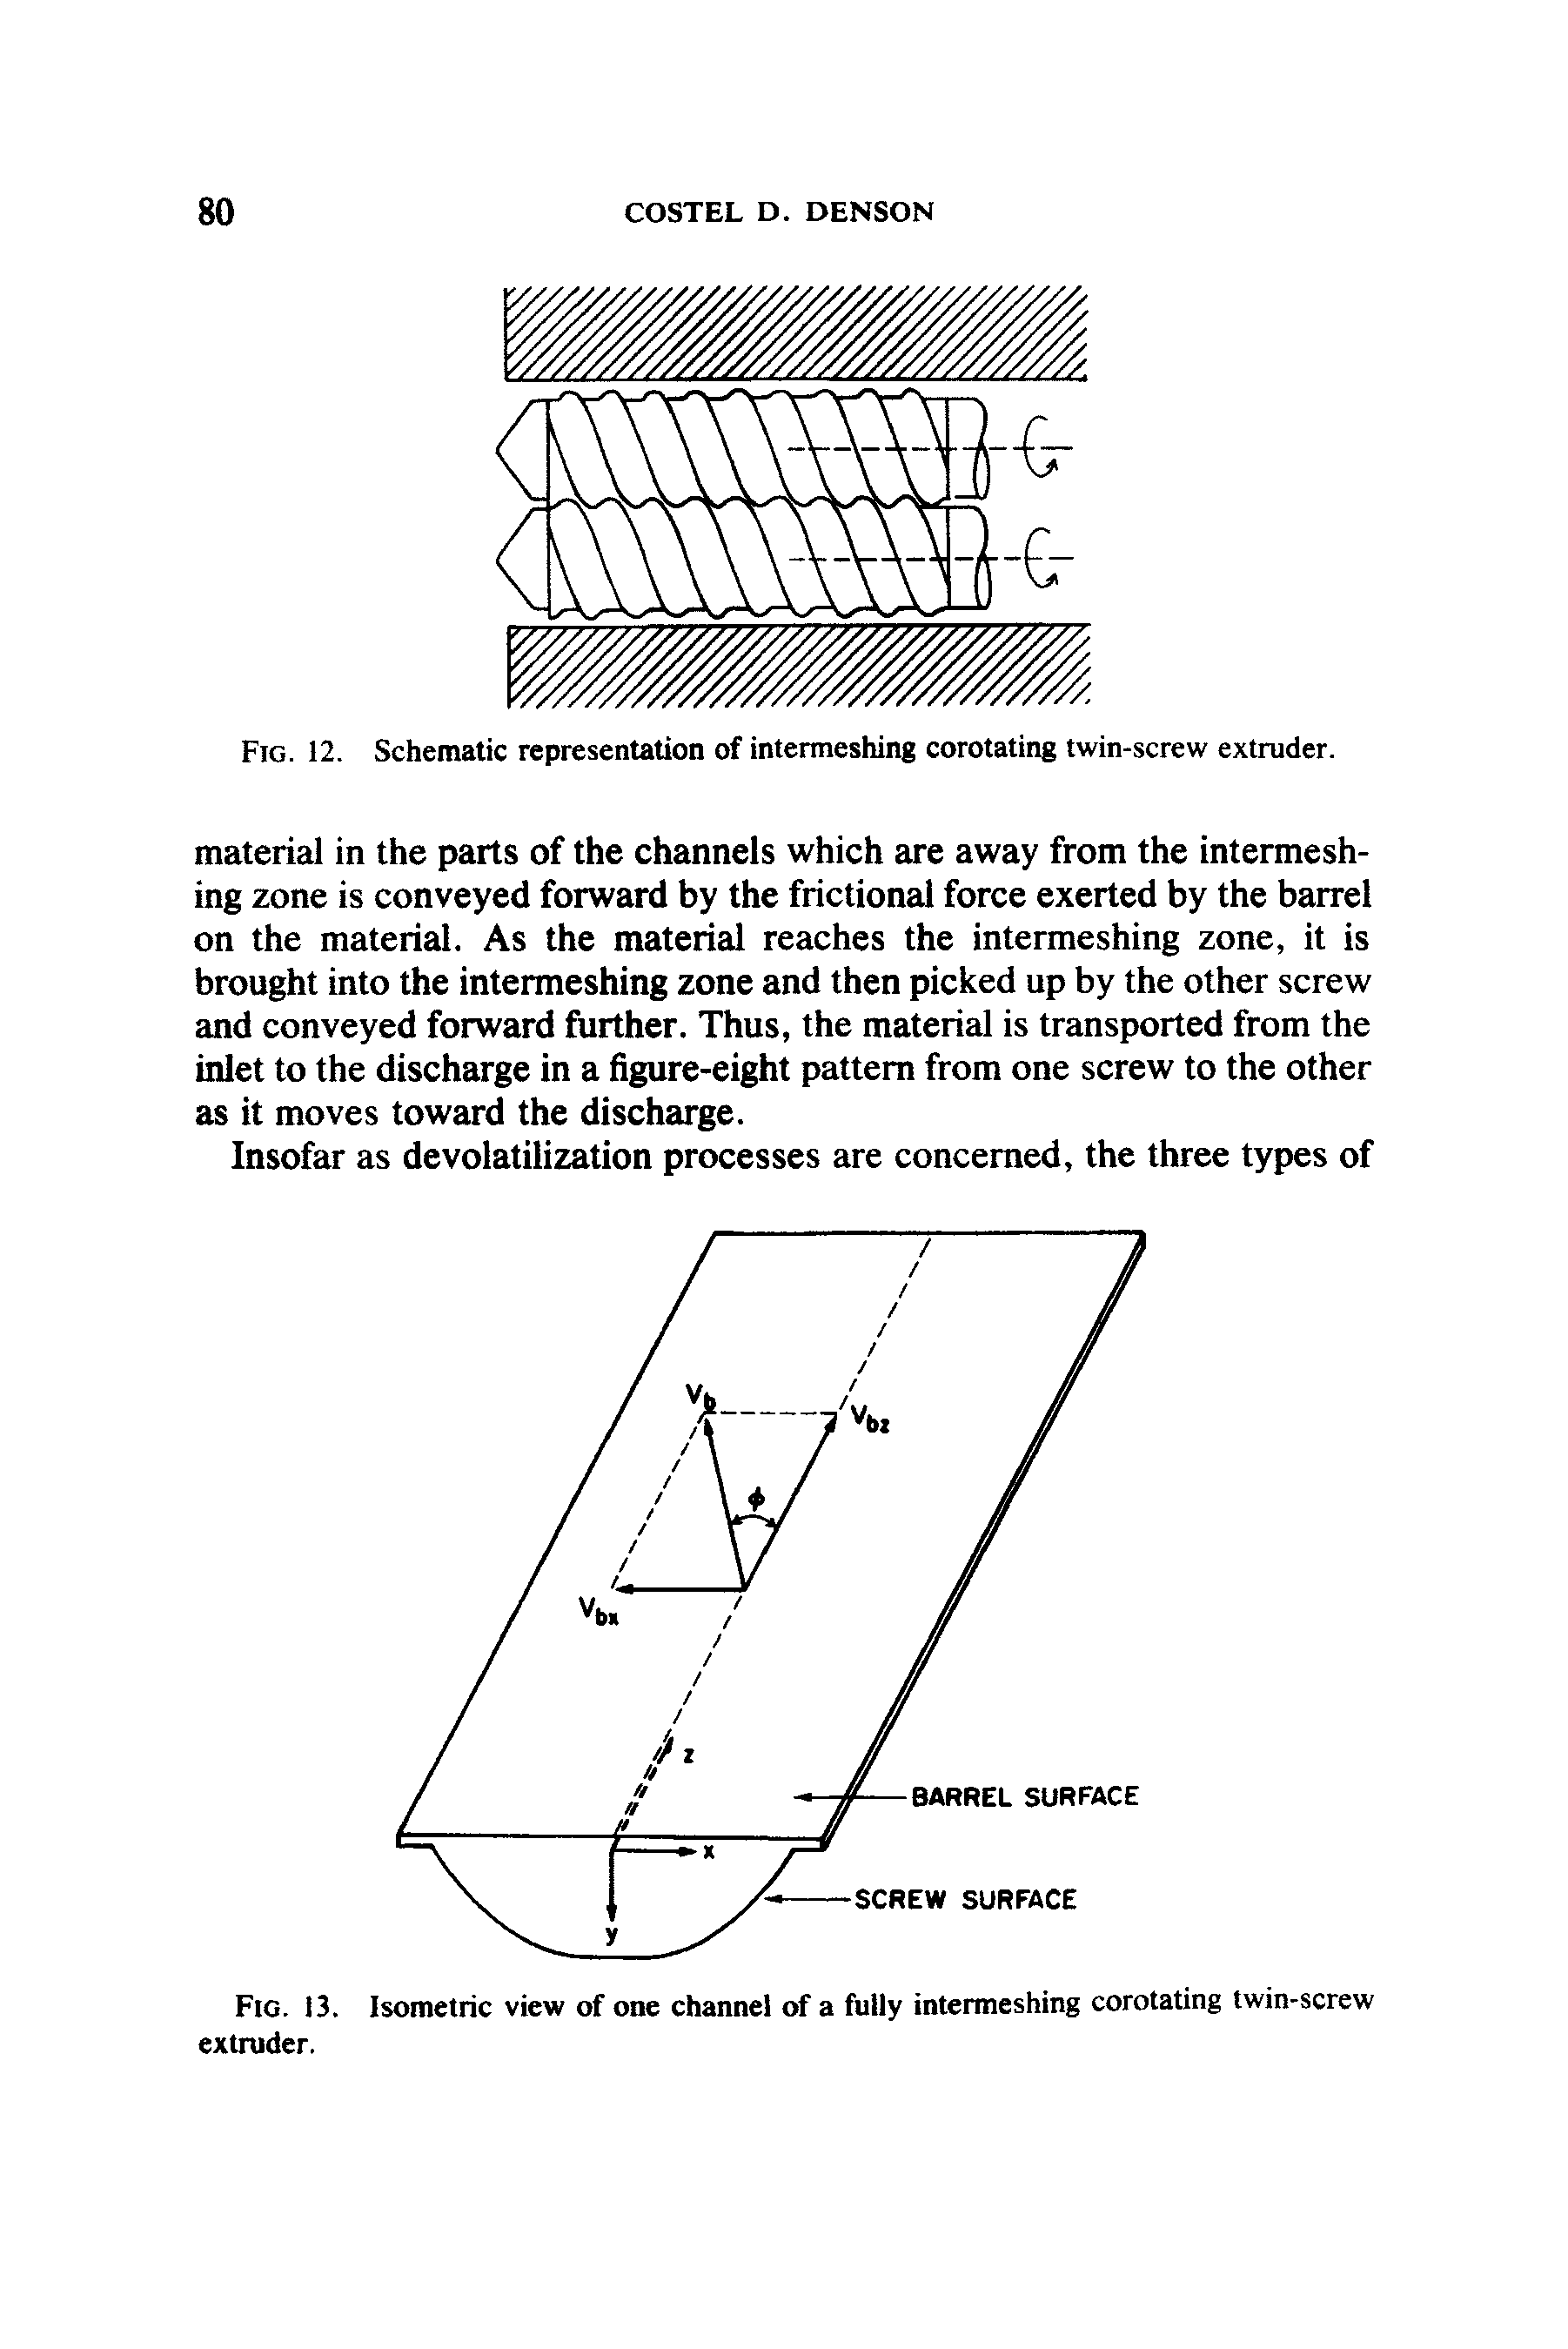 Fig. 12. Schematic representation of intermeshing corotating twin-screw extruder.